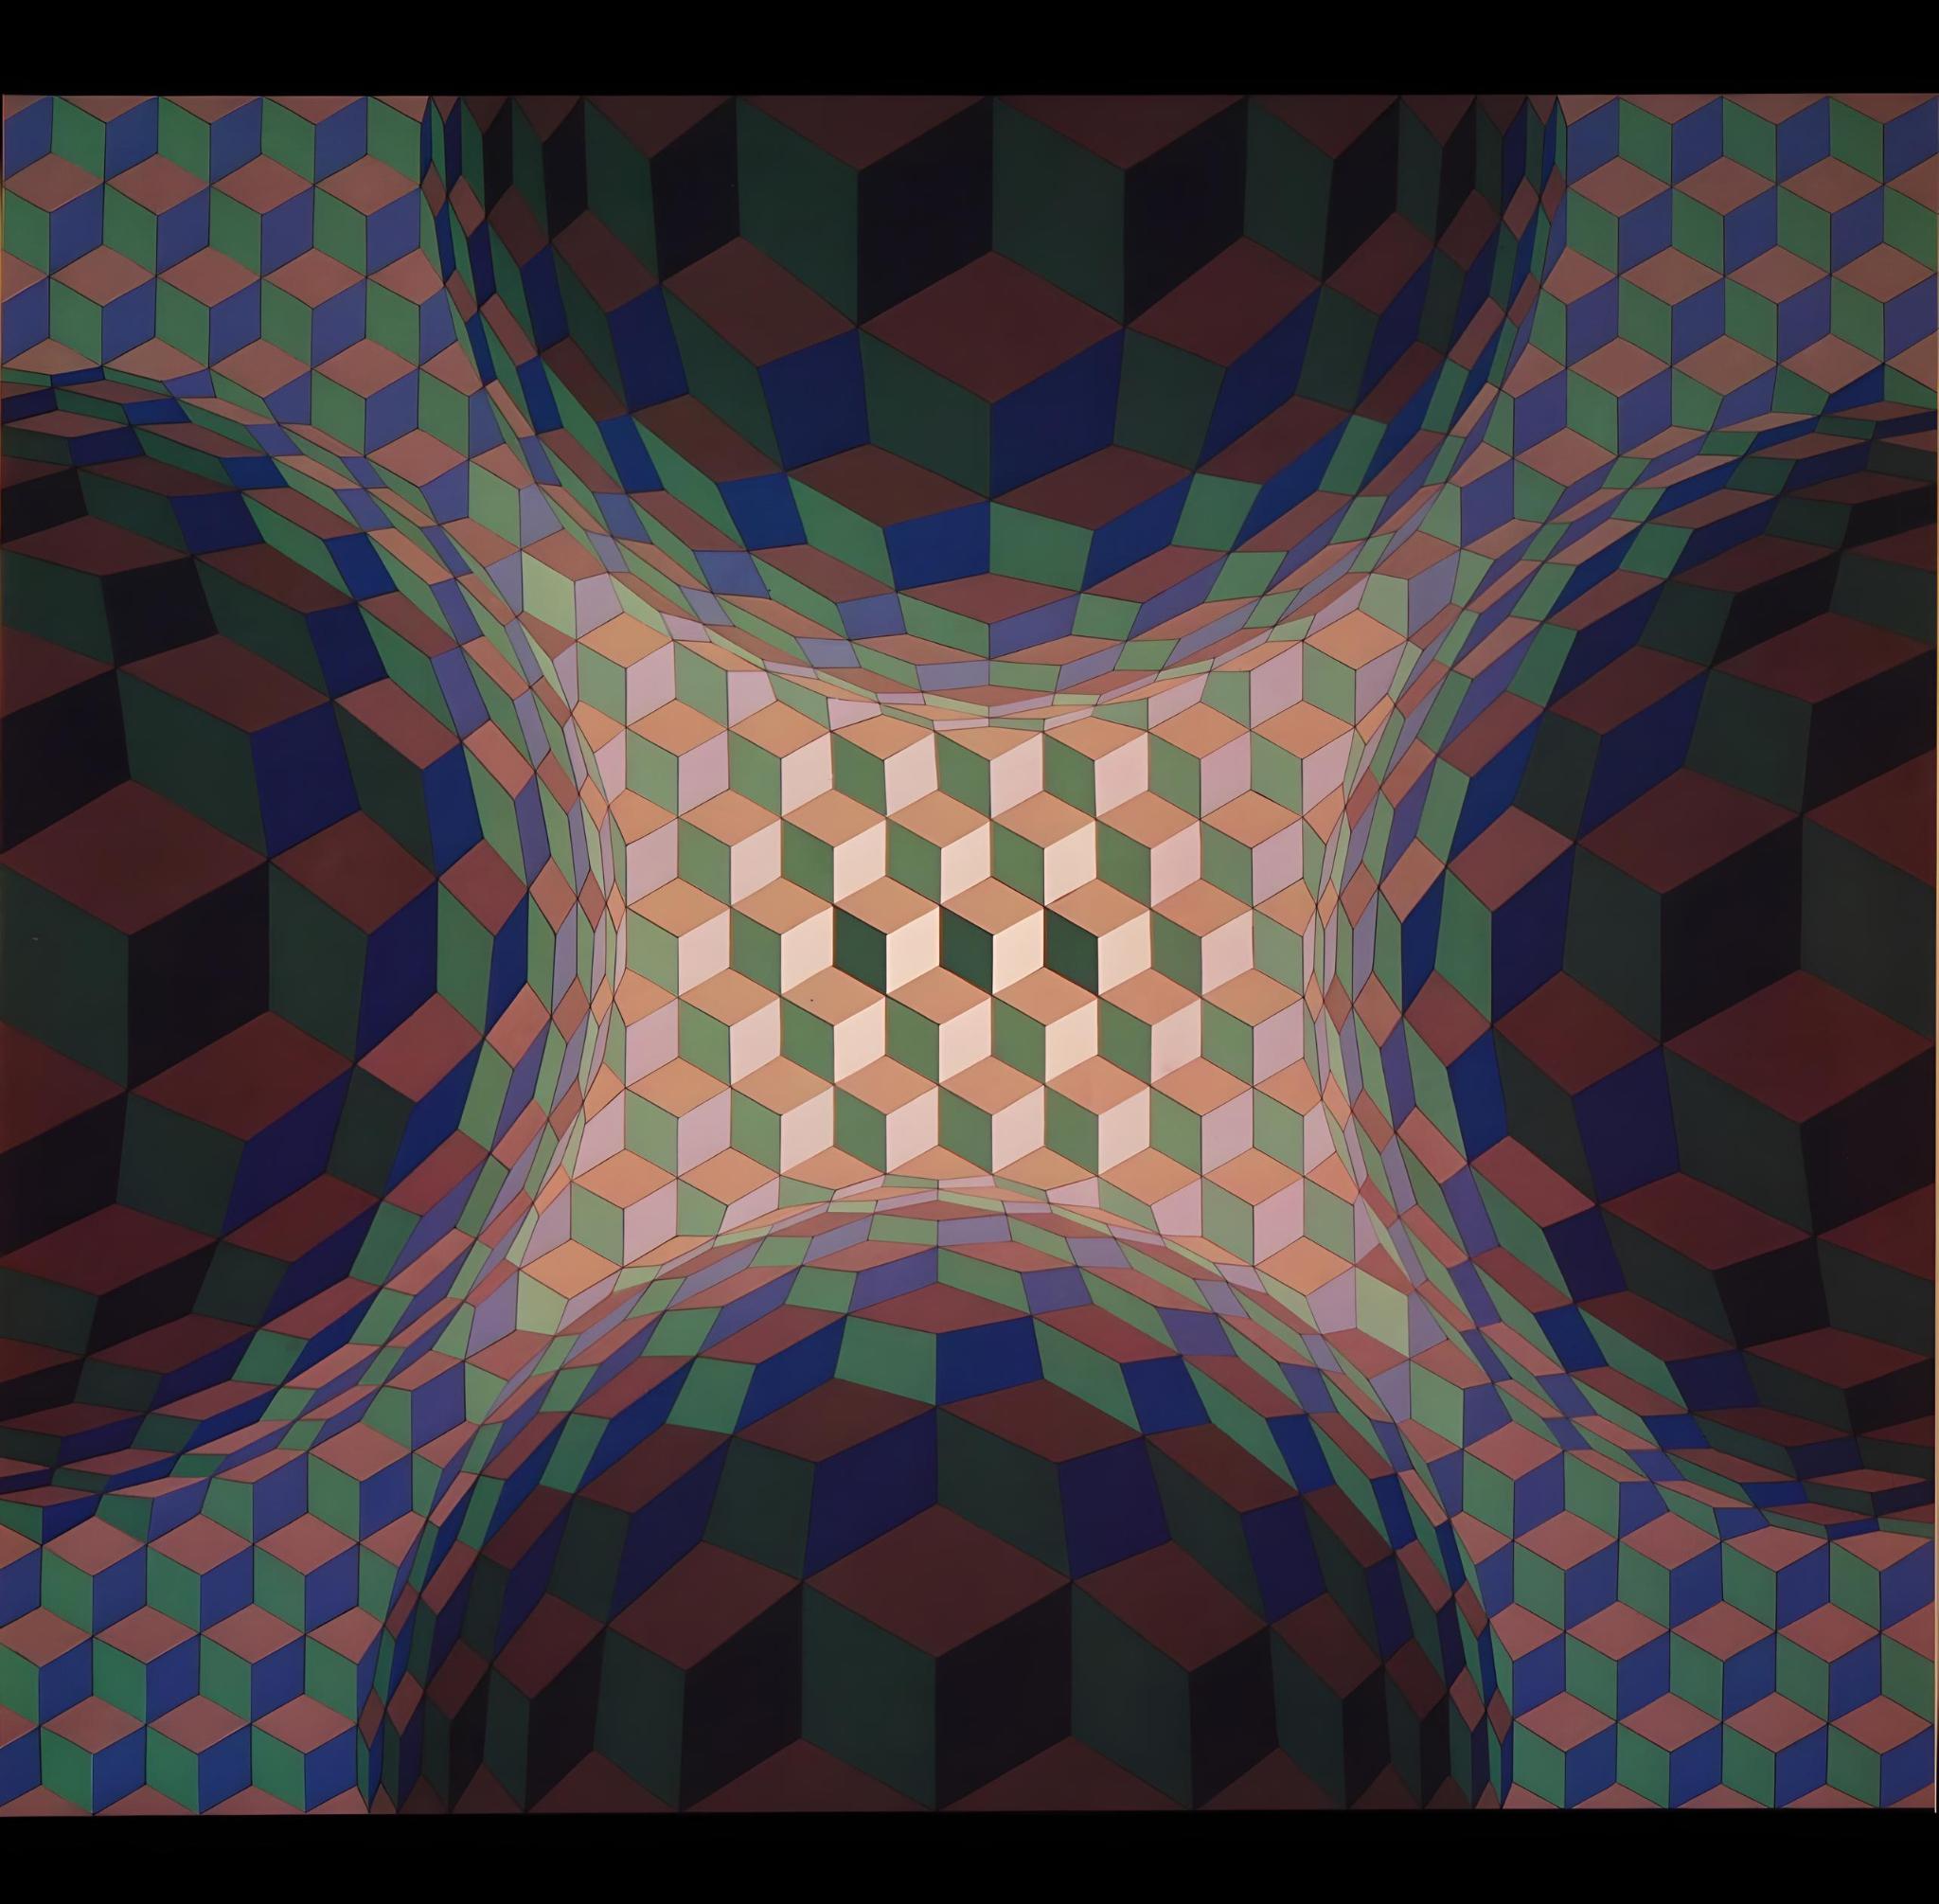 Vasarely, Composition, Structures universelles de l'Hexagone (after)